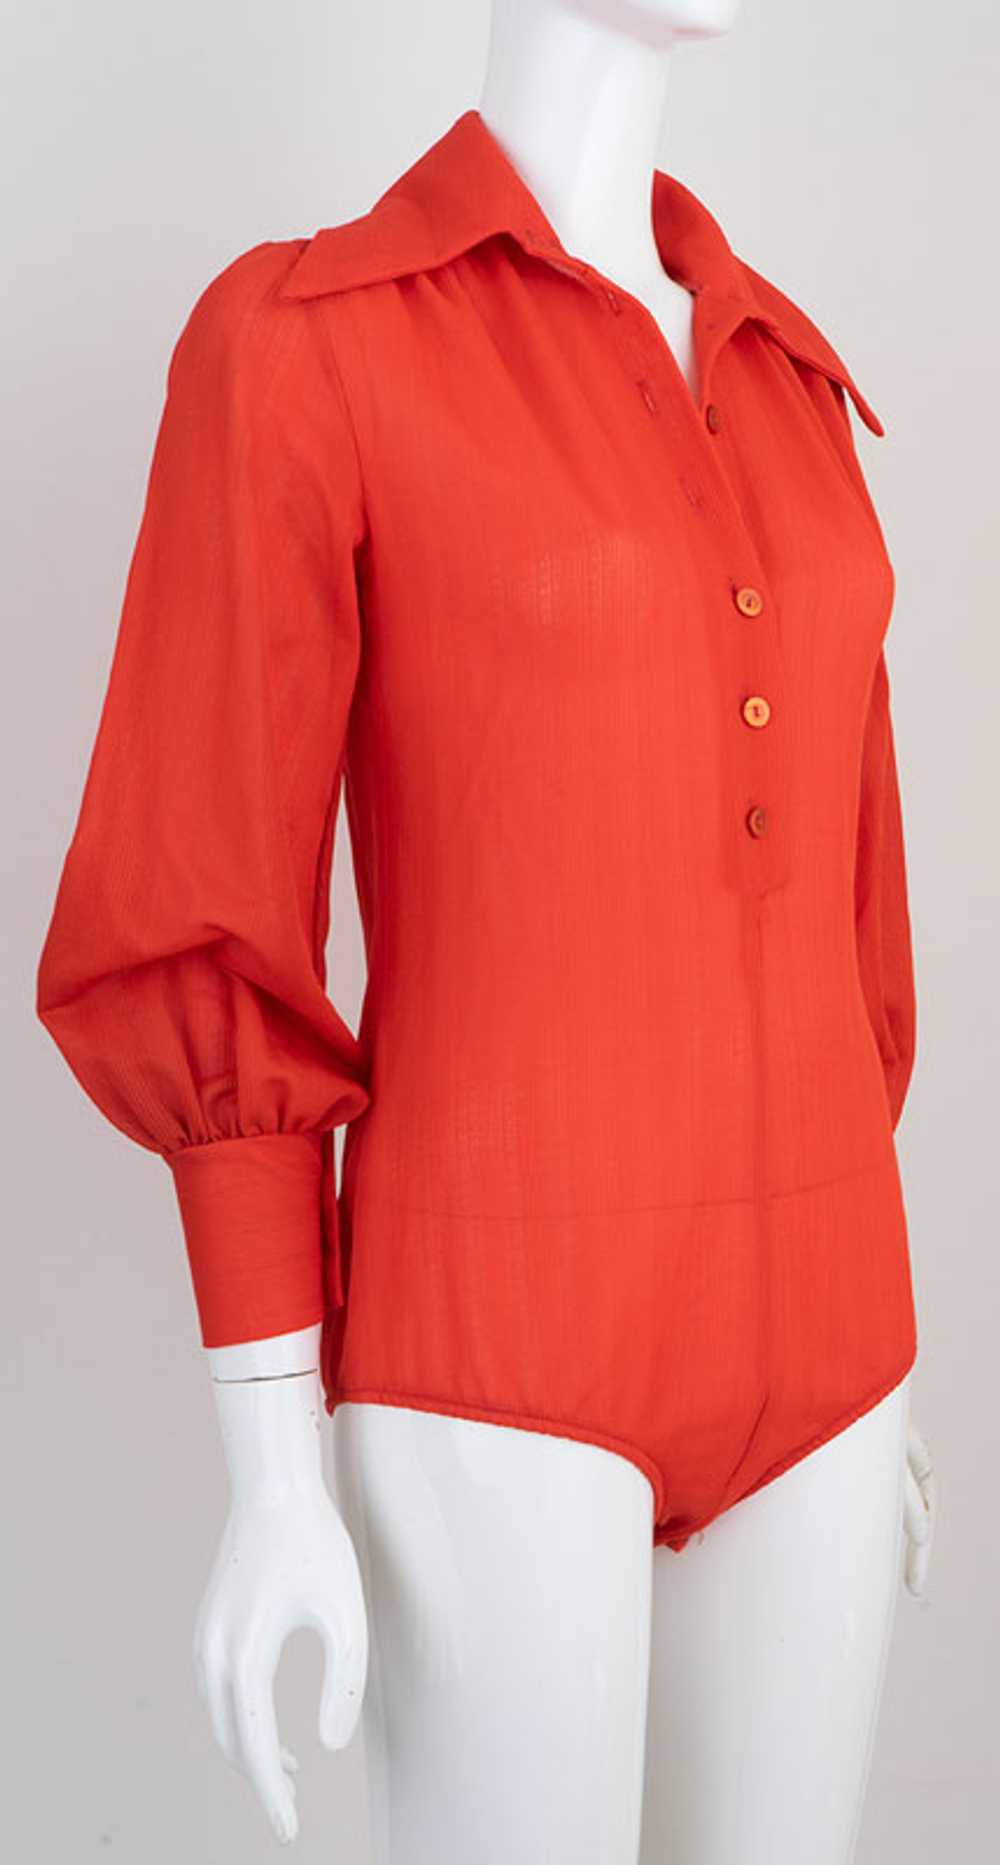 Red 1970s Bodysuit - image 1